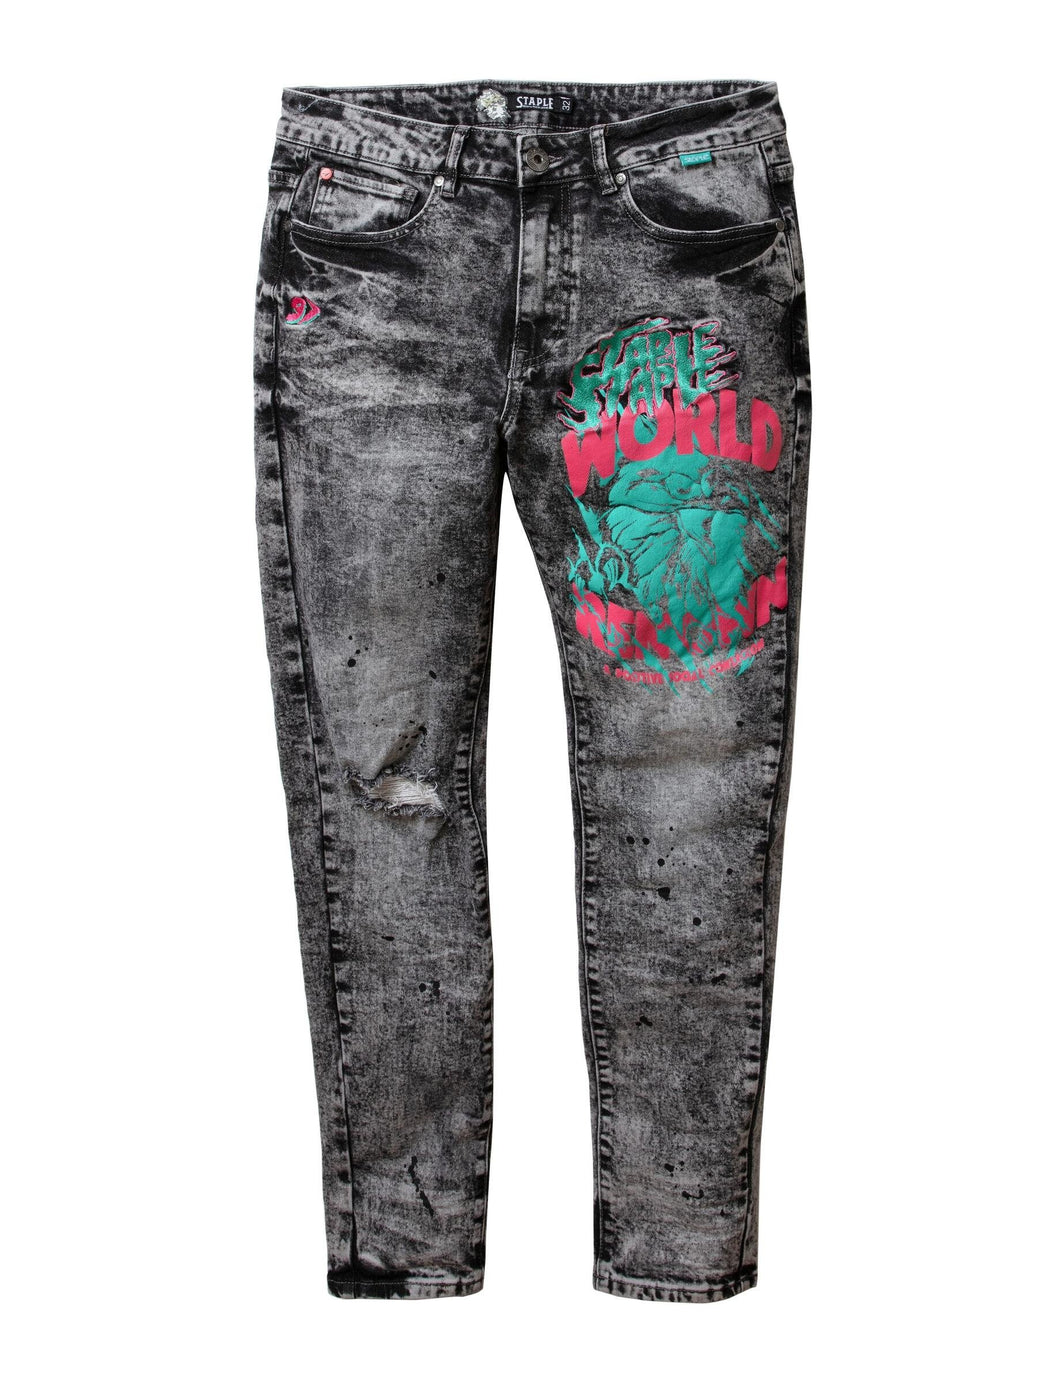 Buy Staple Rebels Denim Pants - Black - Swaggerlikeme.com / Grand General Store